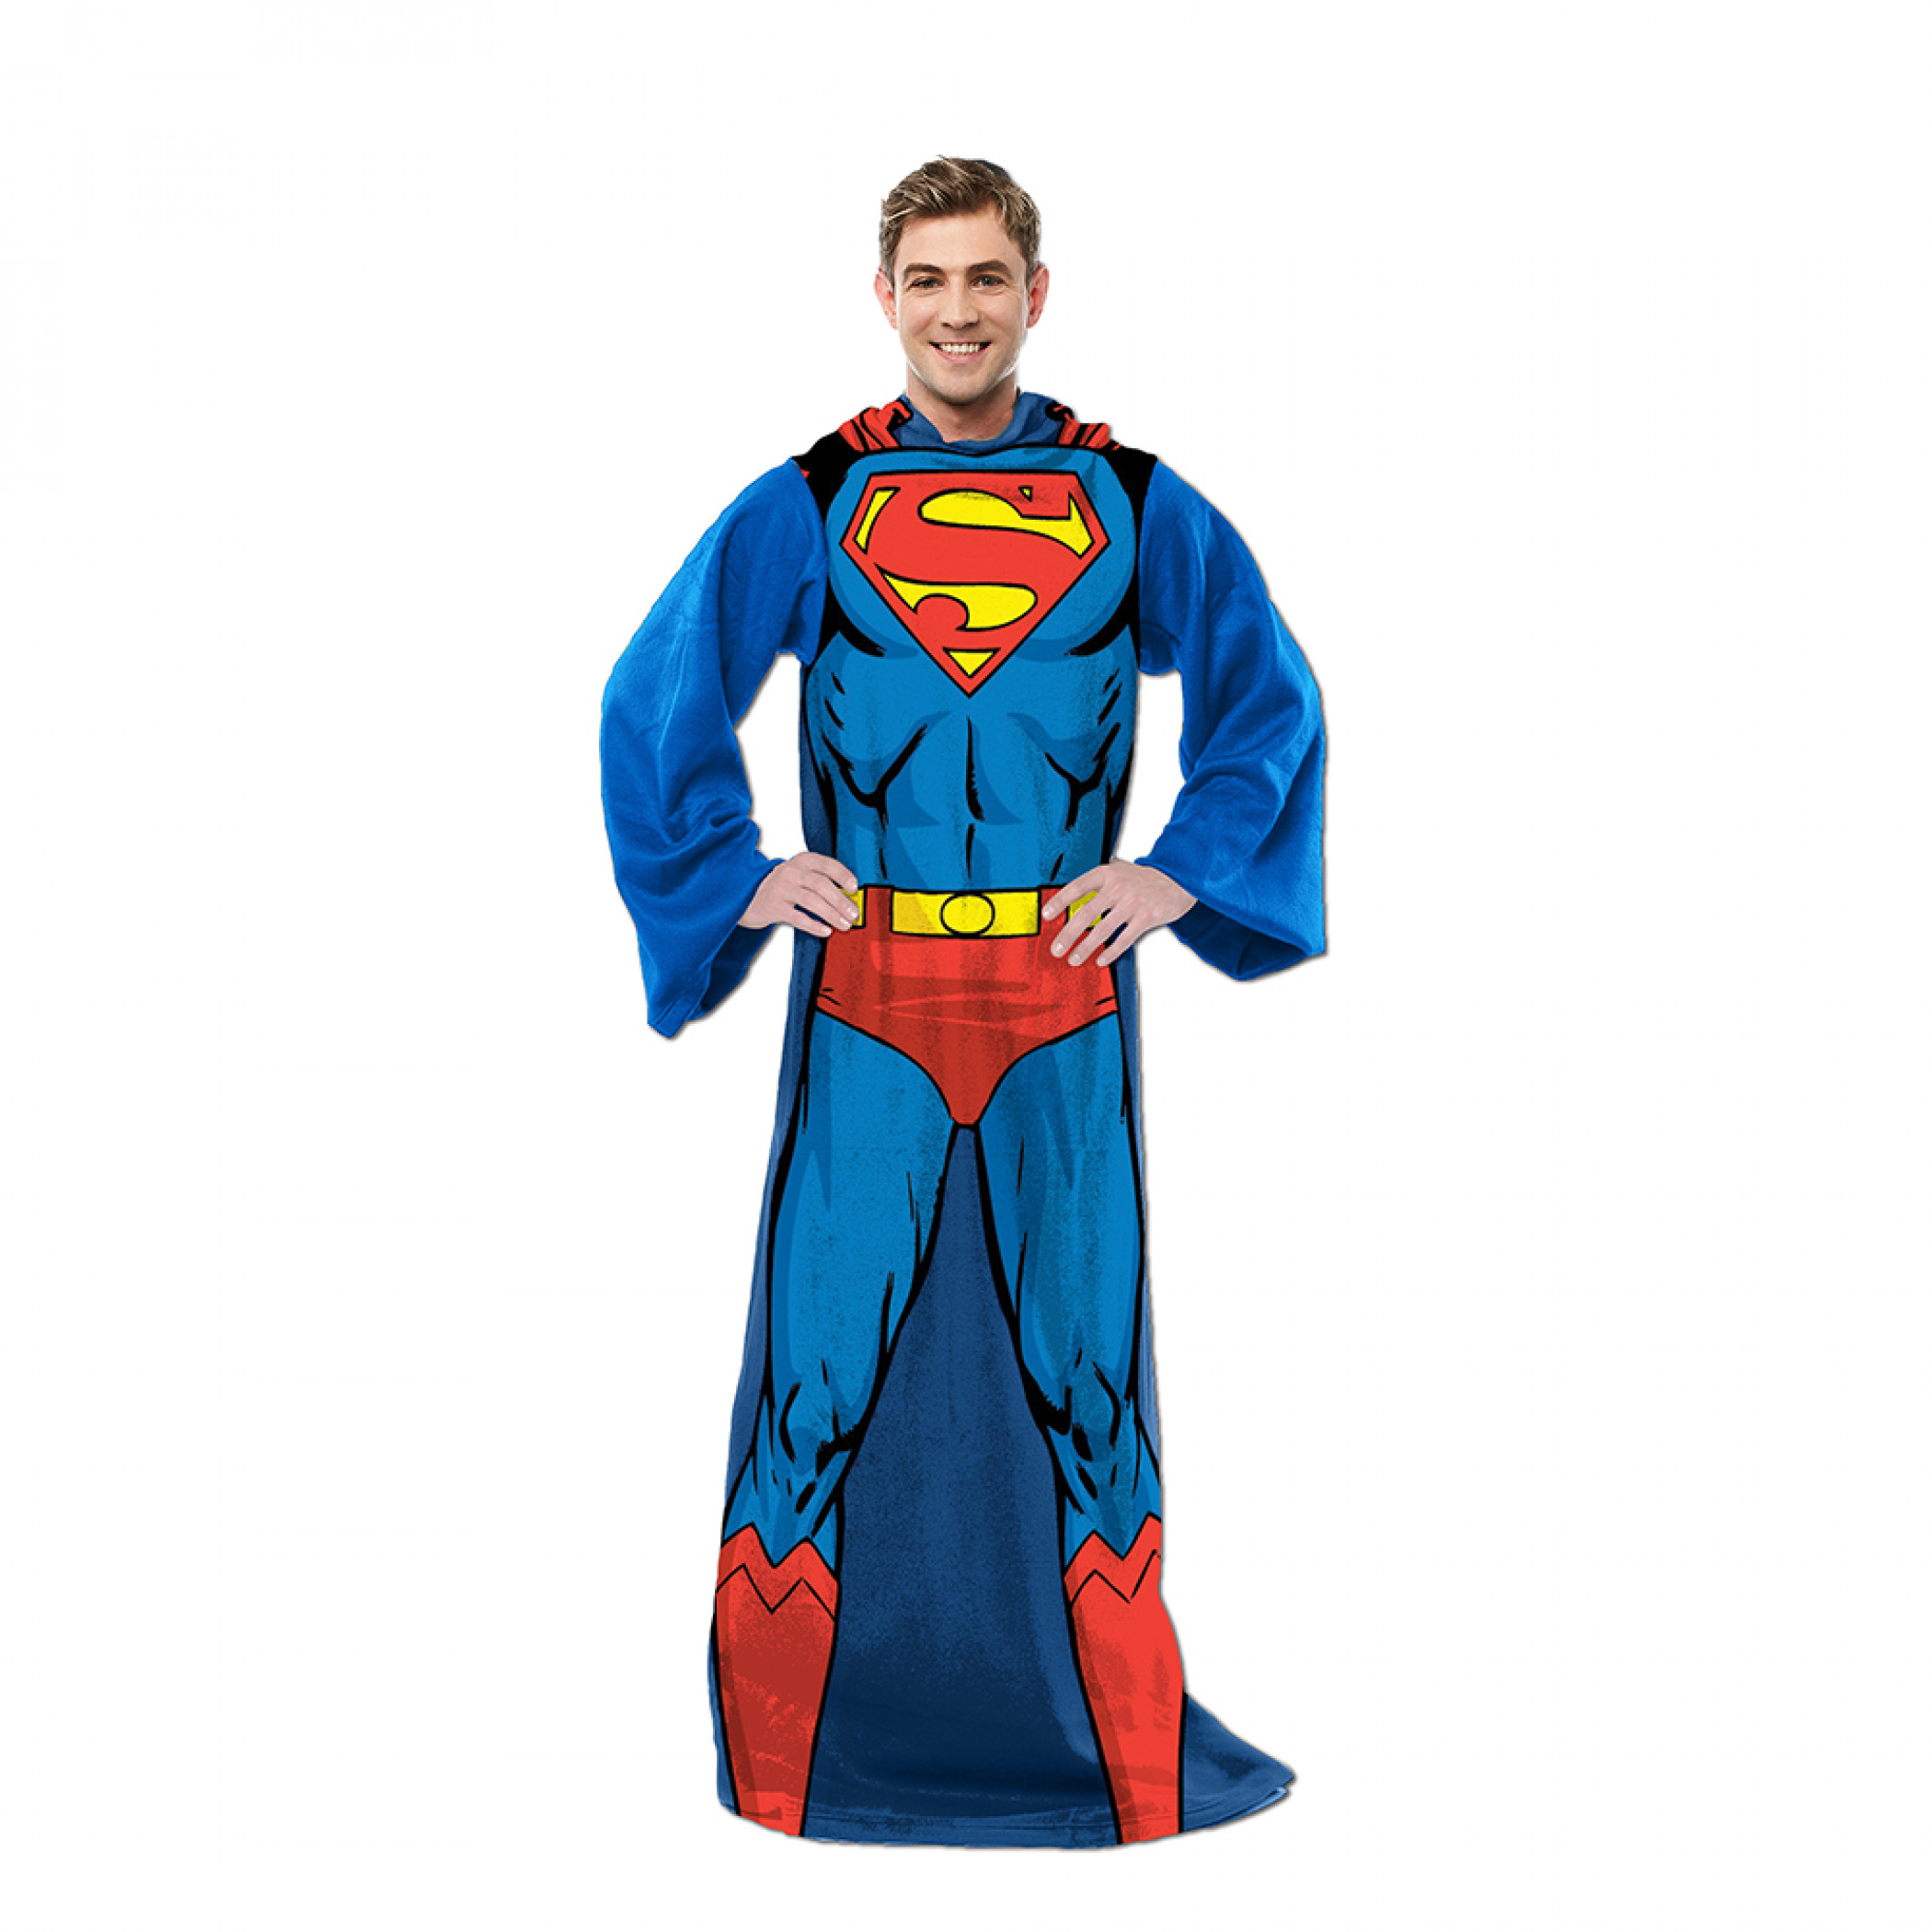 Superman In Action Adult Costume Sleeved Blanket